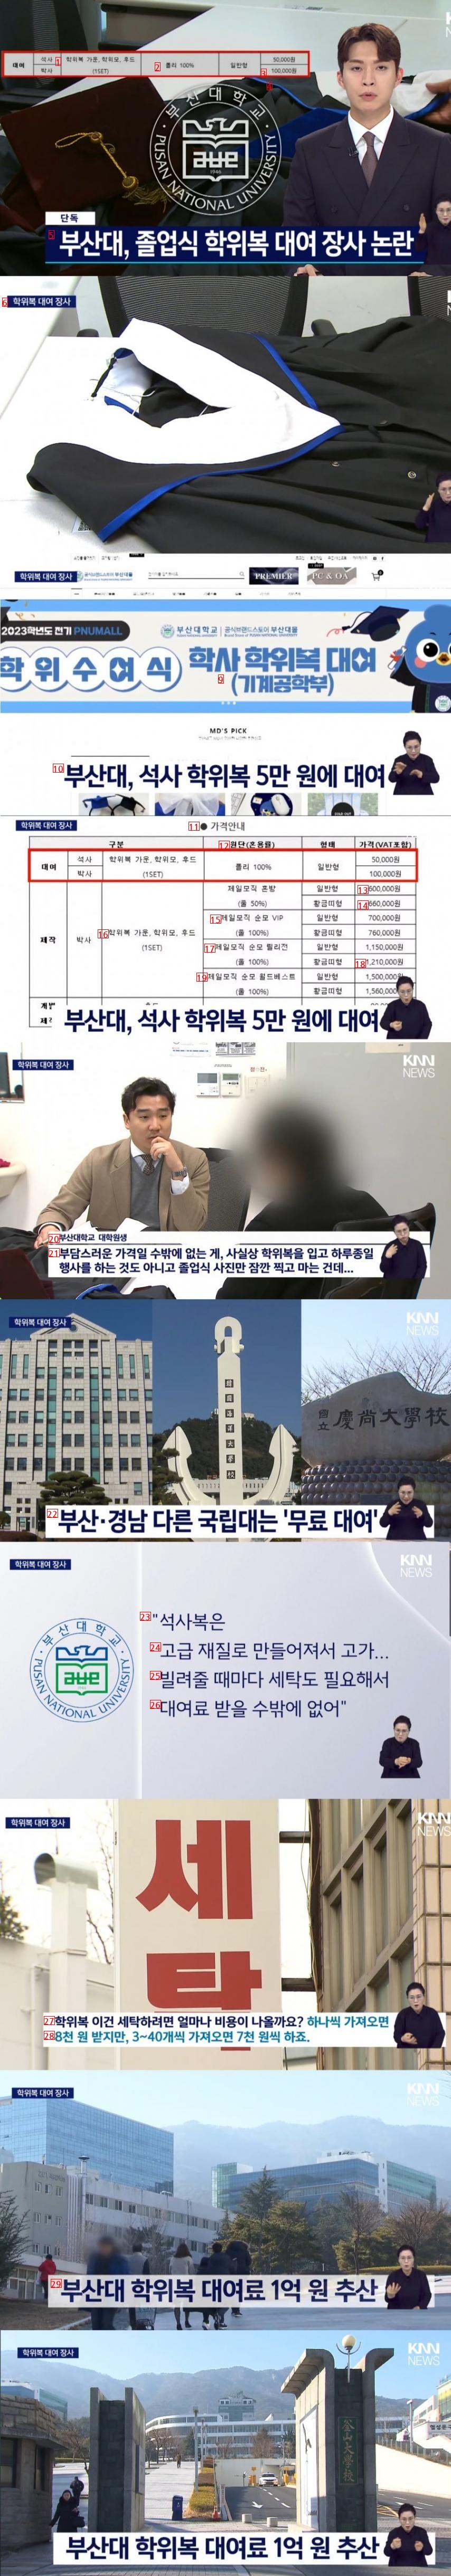 Busan University's Graduation University School Clothes Rental Business Controversy